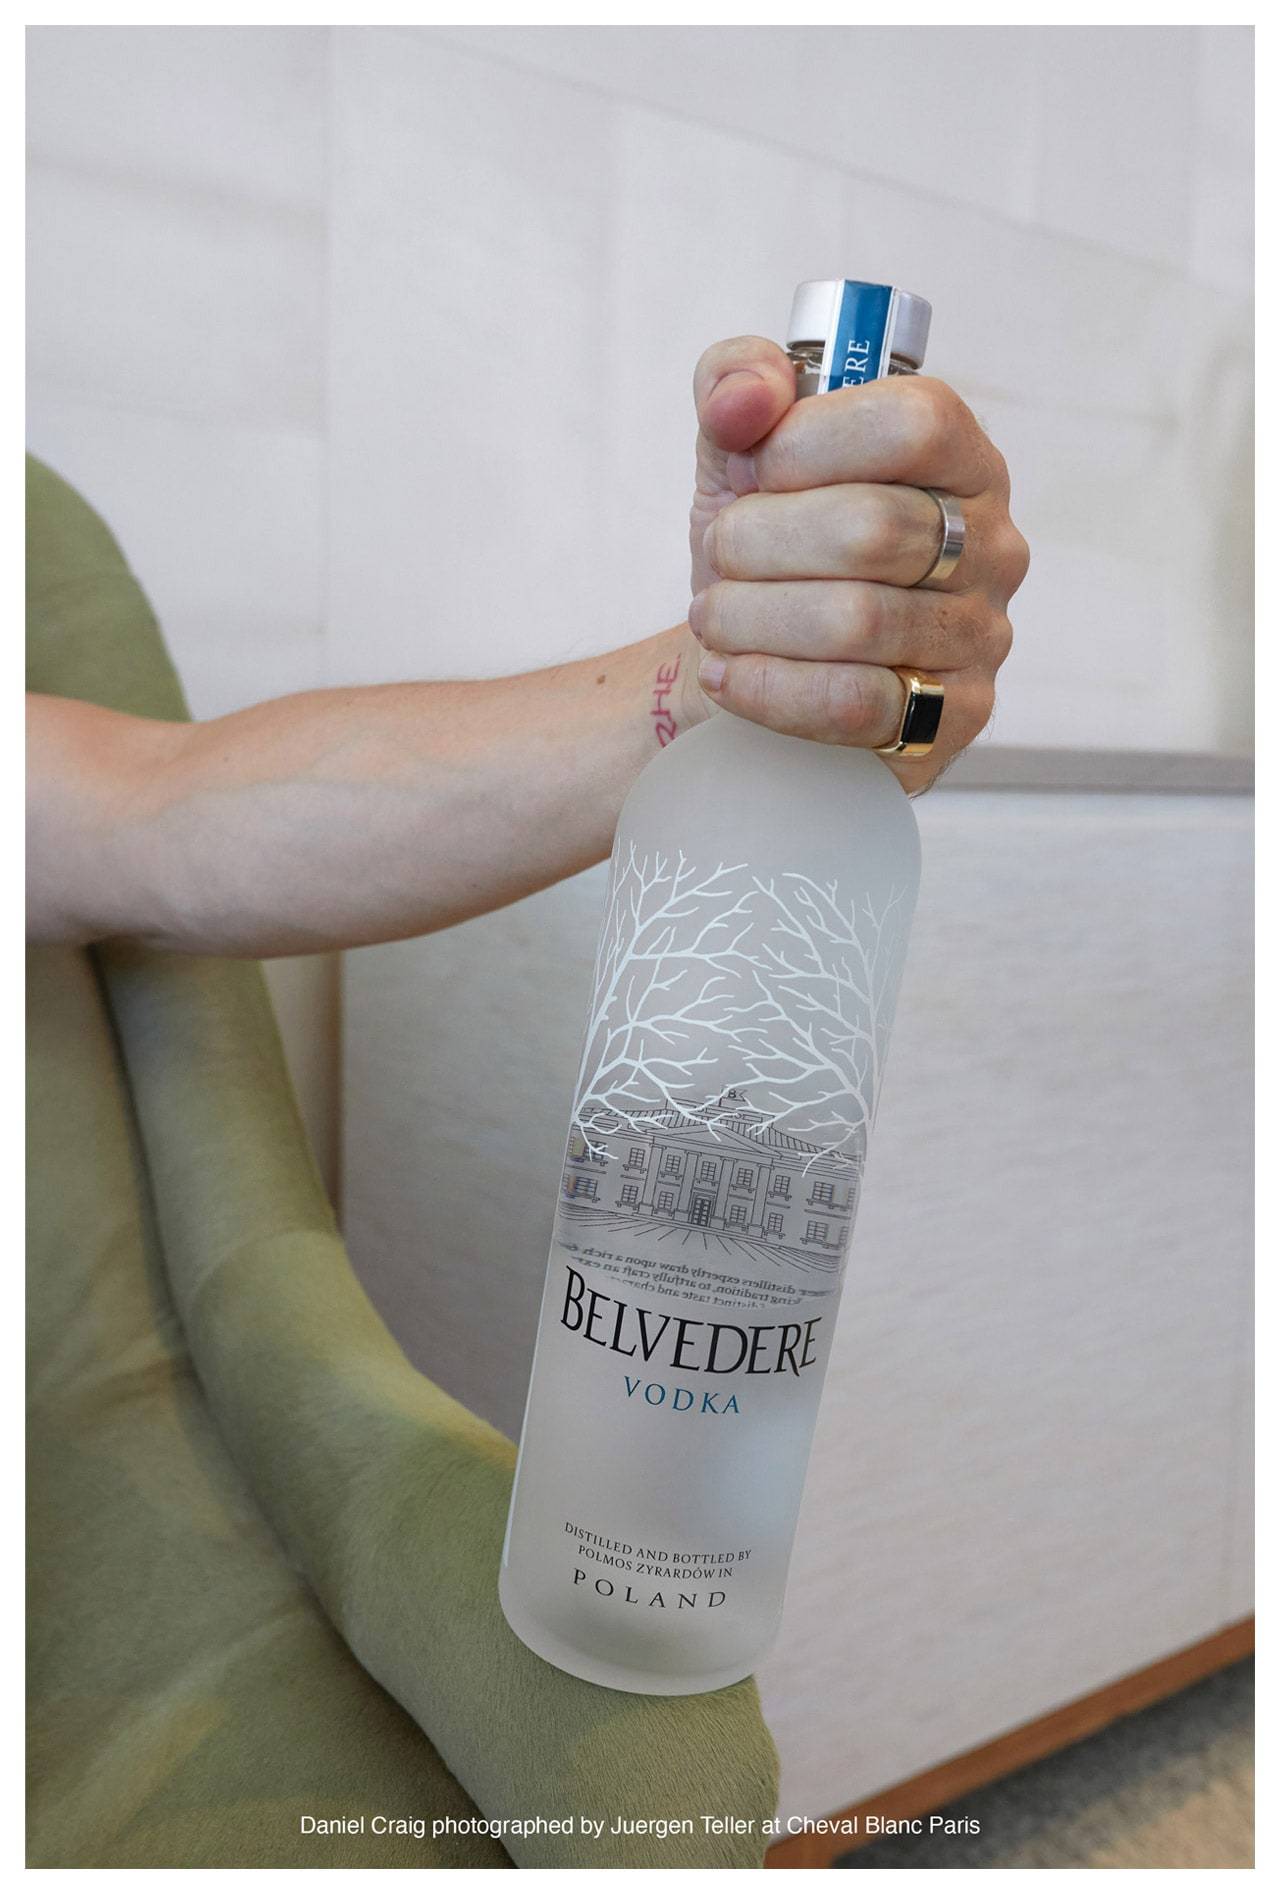 Daniel Craig holding a bottle of Belvedere